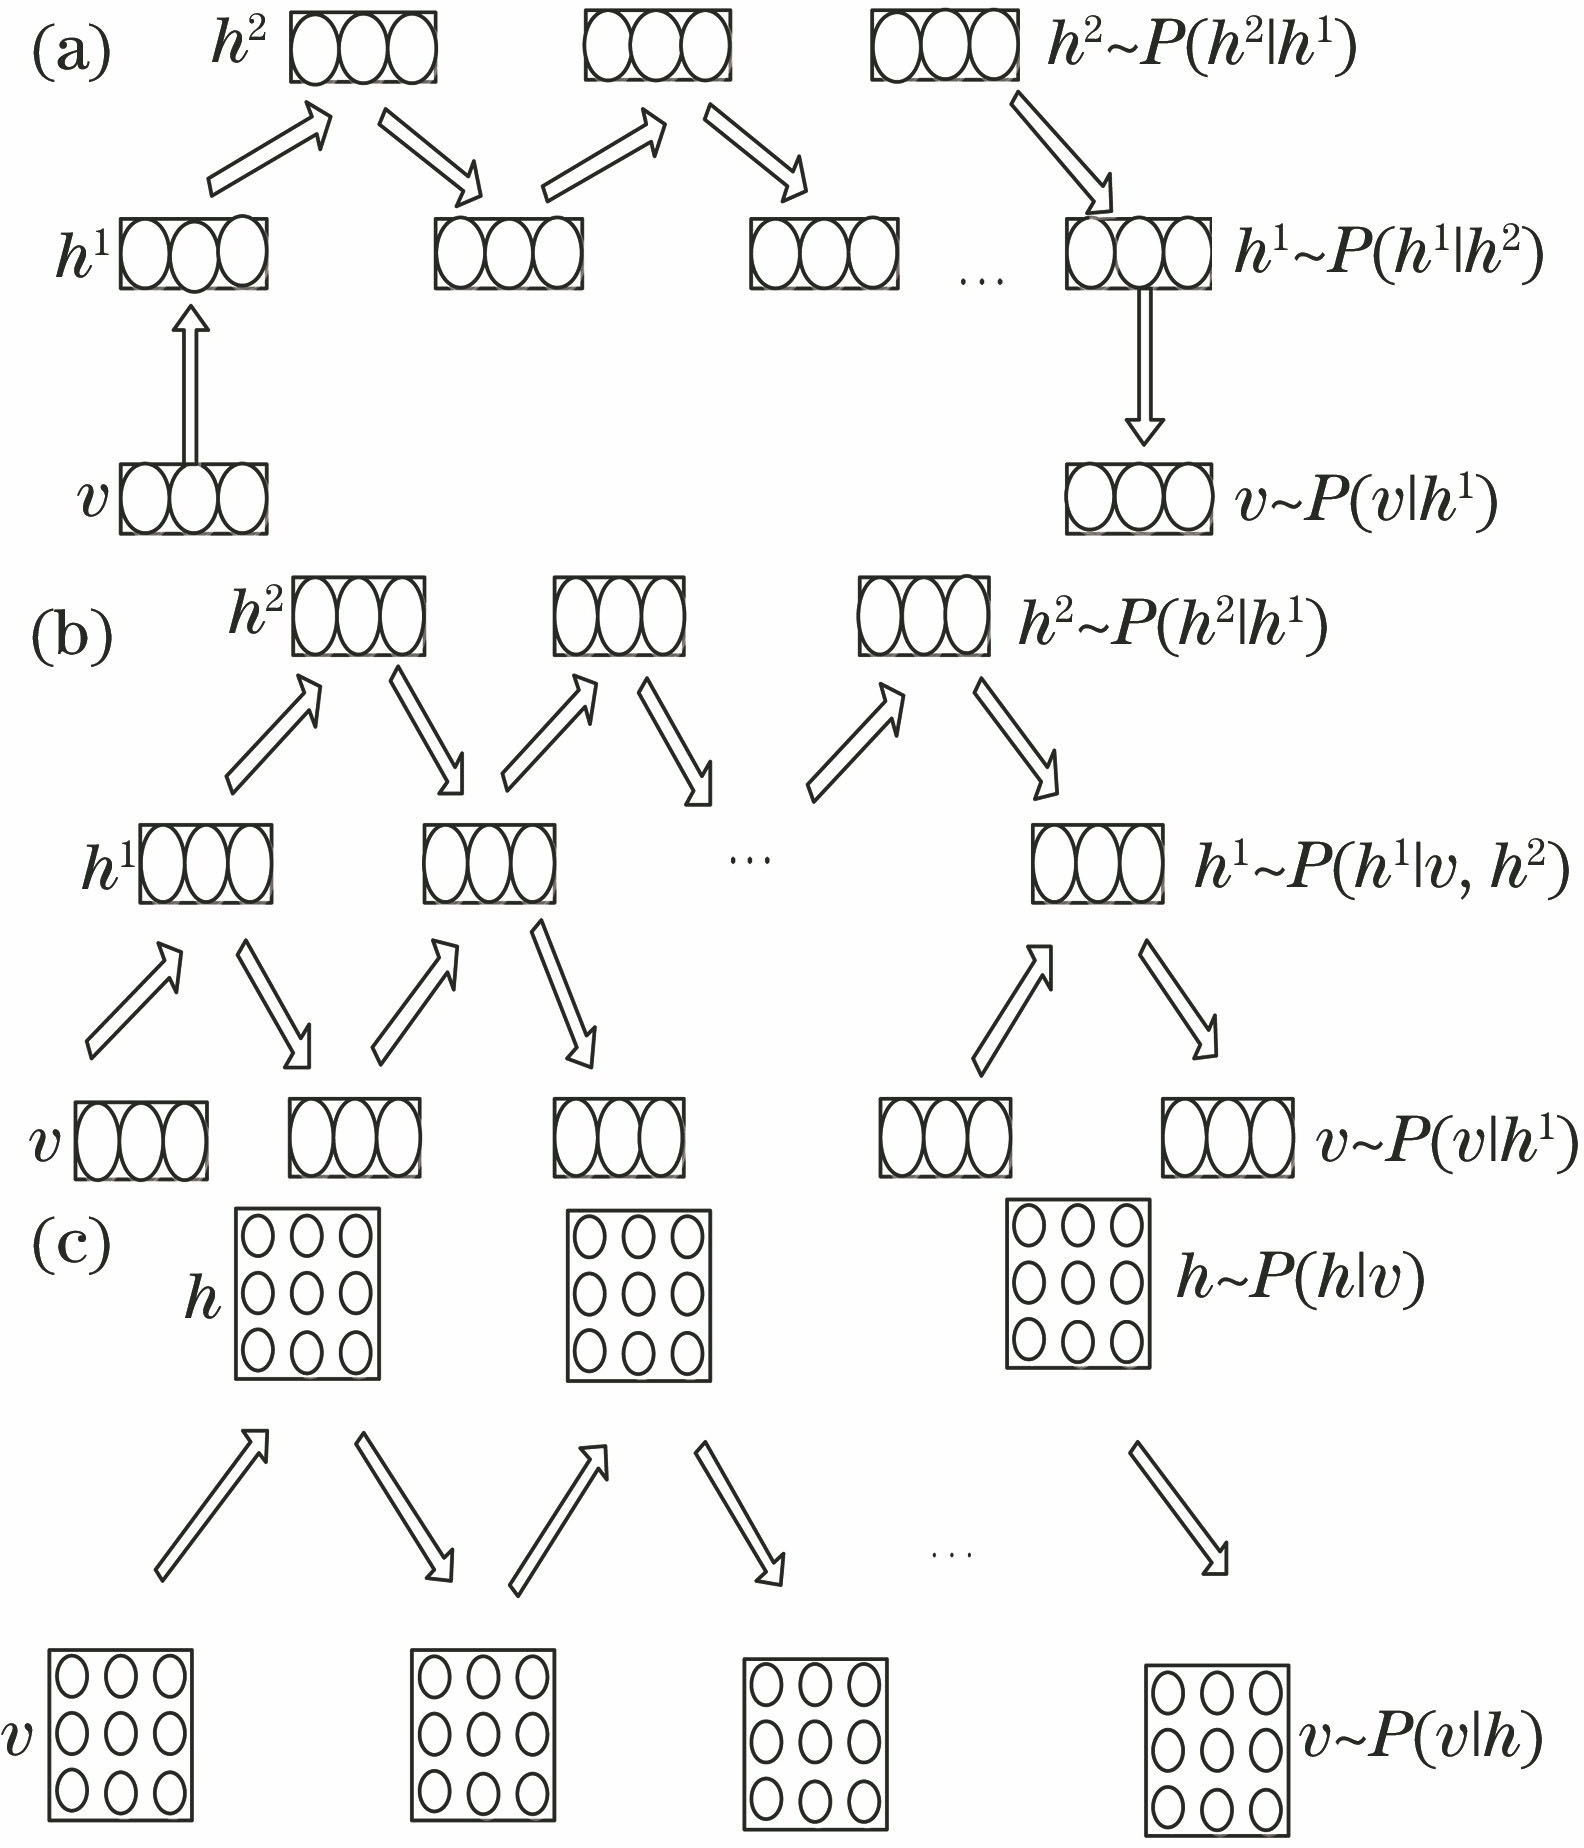 Sampling processes of different models. (a) DBN model; (b) DBM model; (c) CRBM model